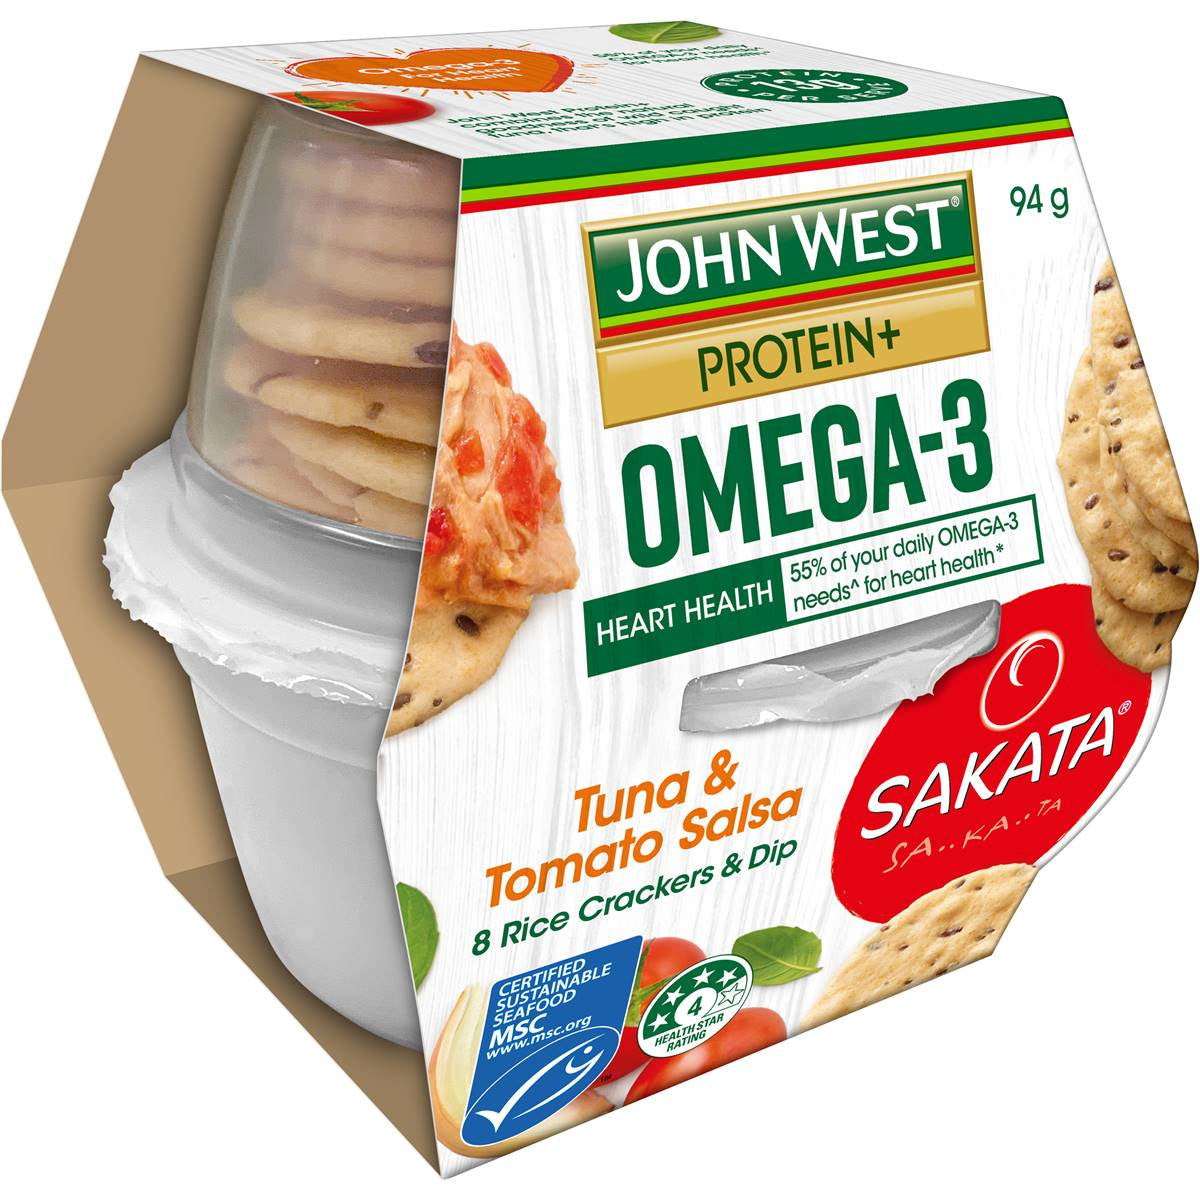 John West Tuna Protein+Omega3 Tomato Salsa Rice Crackers & Dip 94g